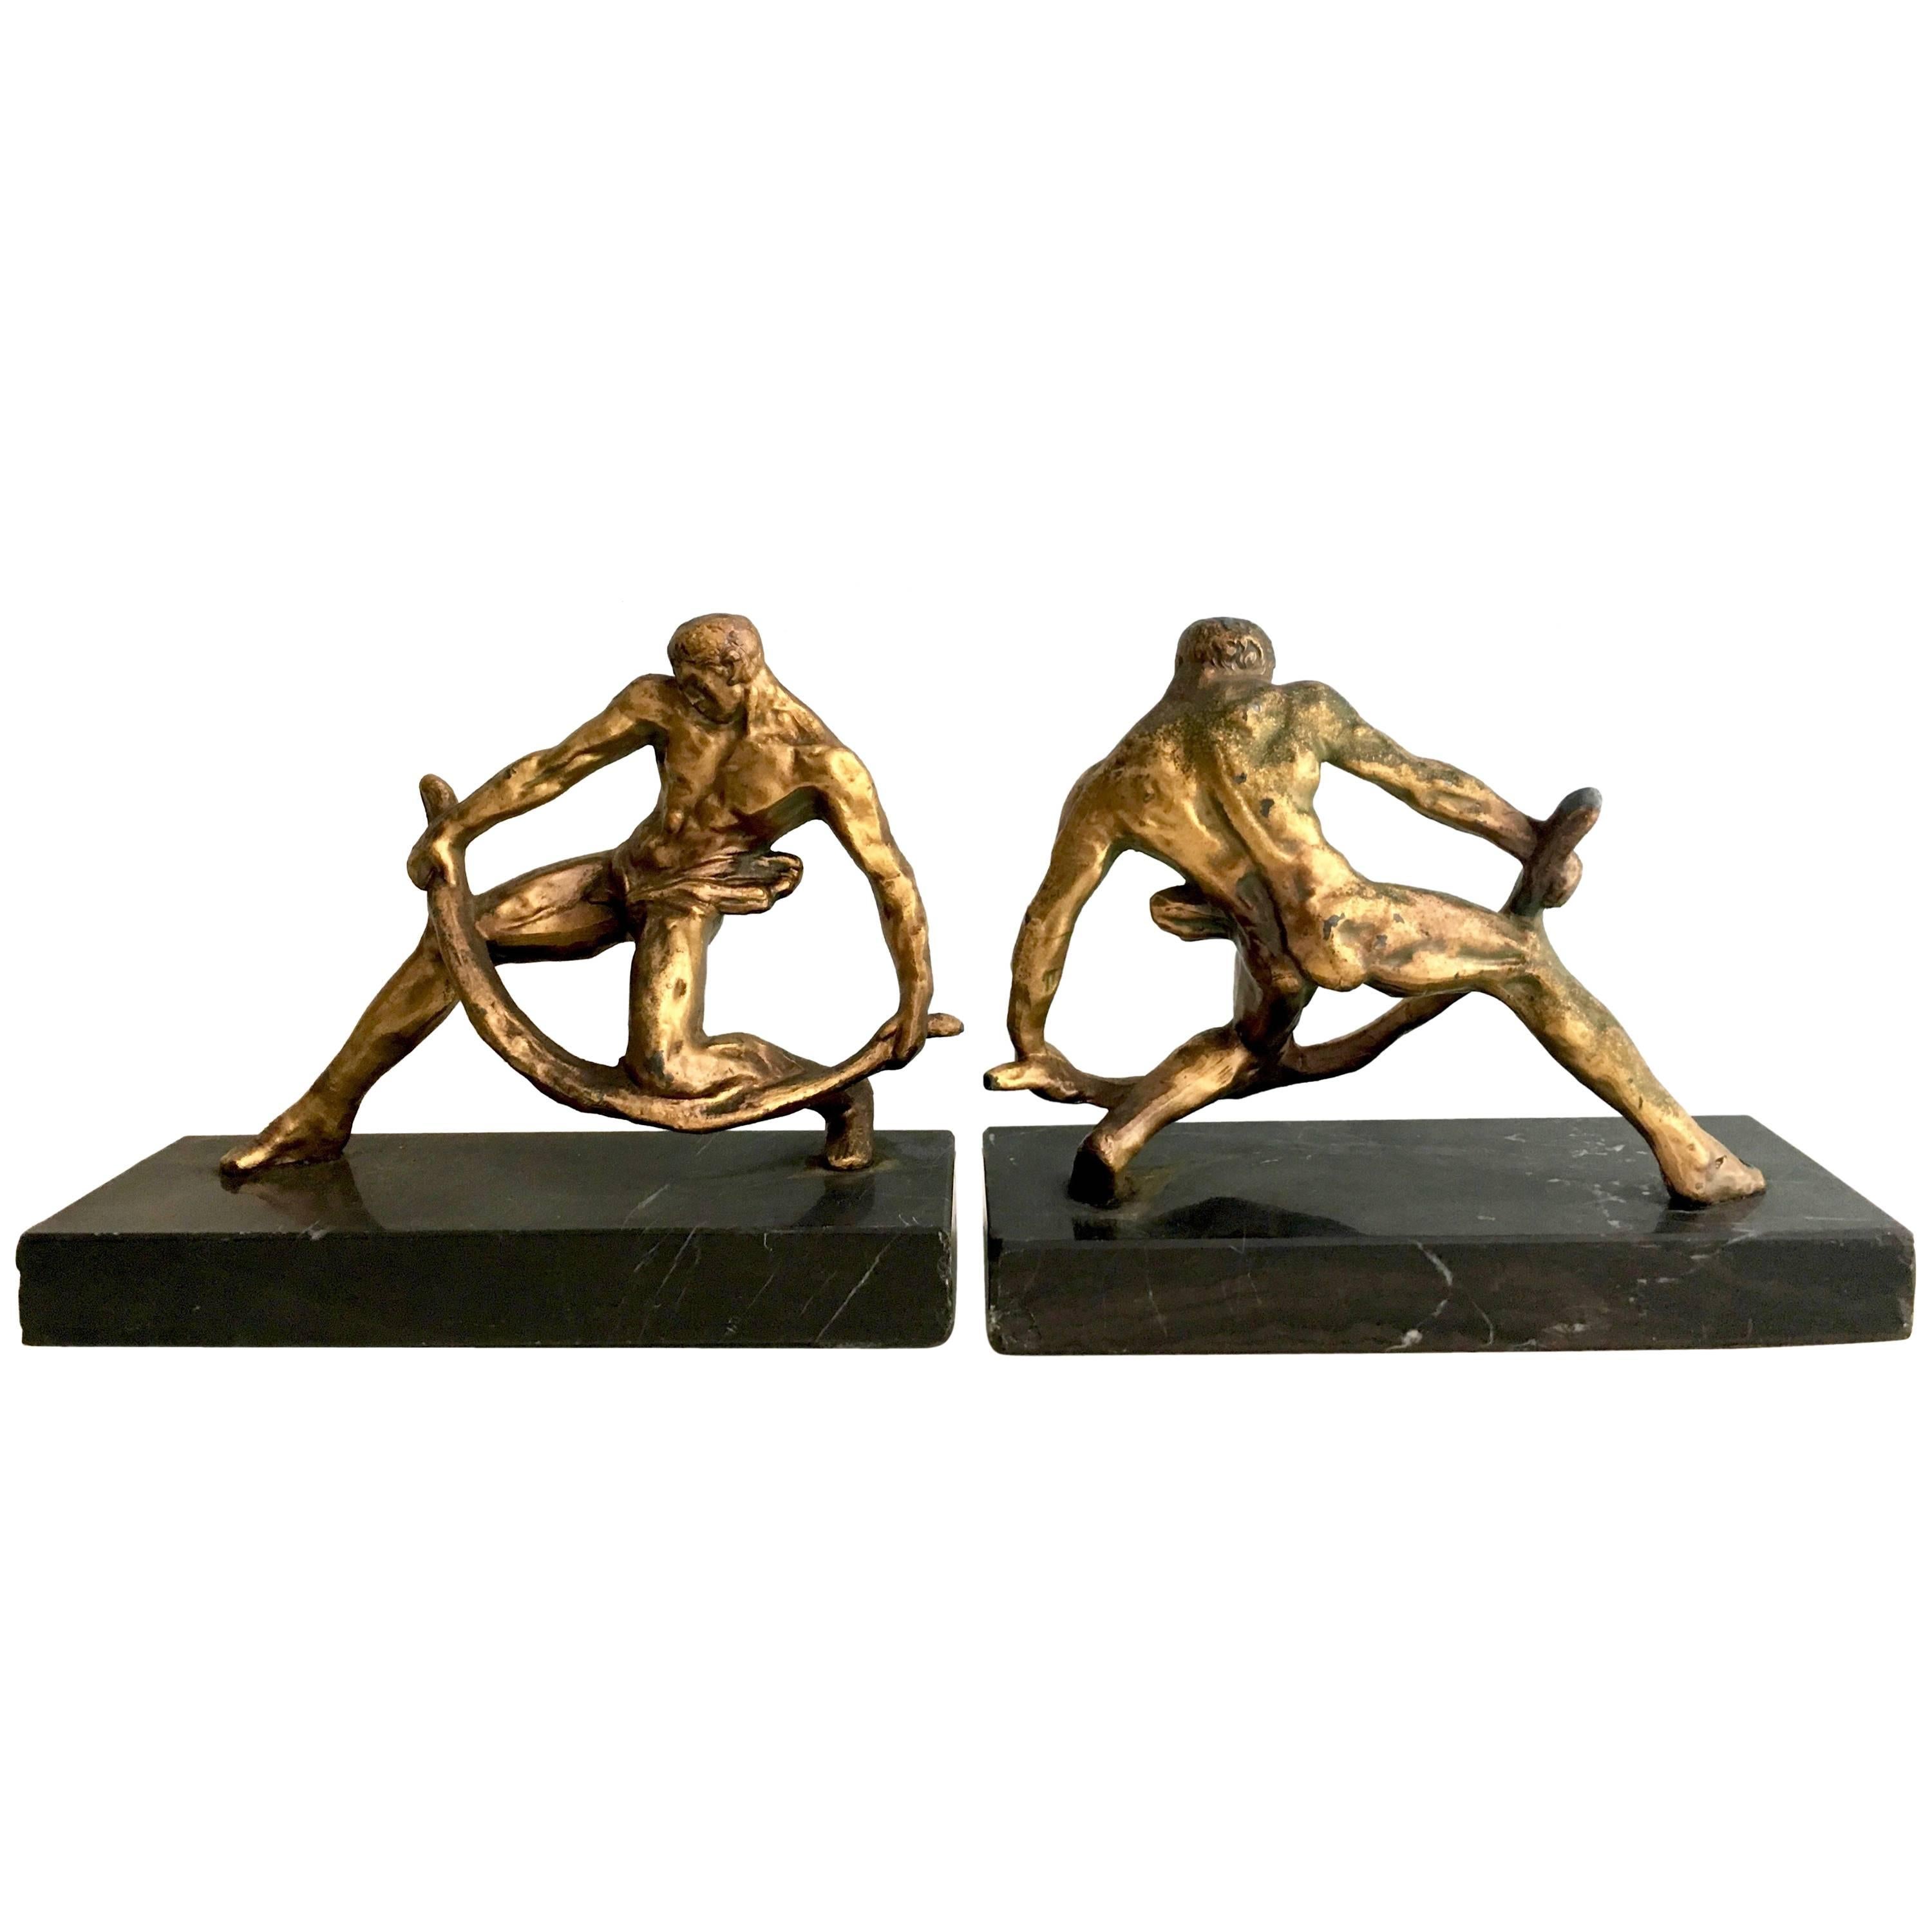 Pair of Gilt Sculptural Male Muscular Bookends